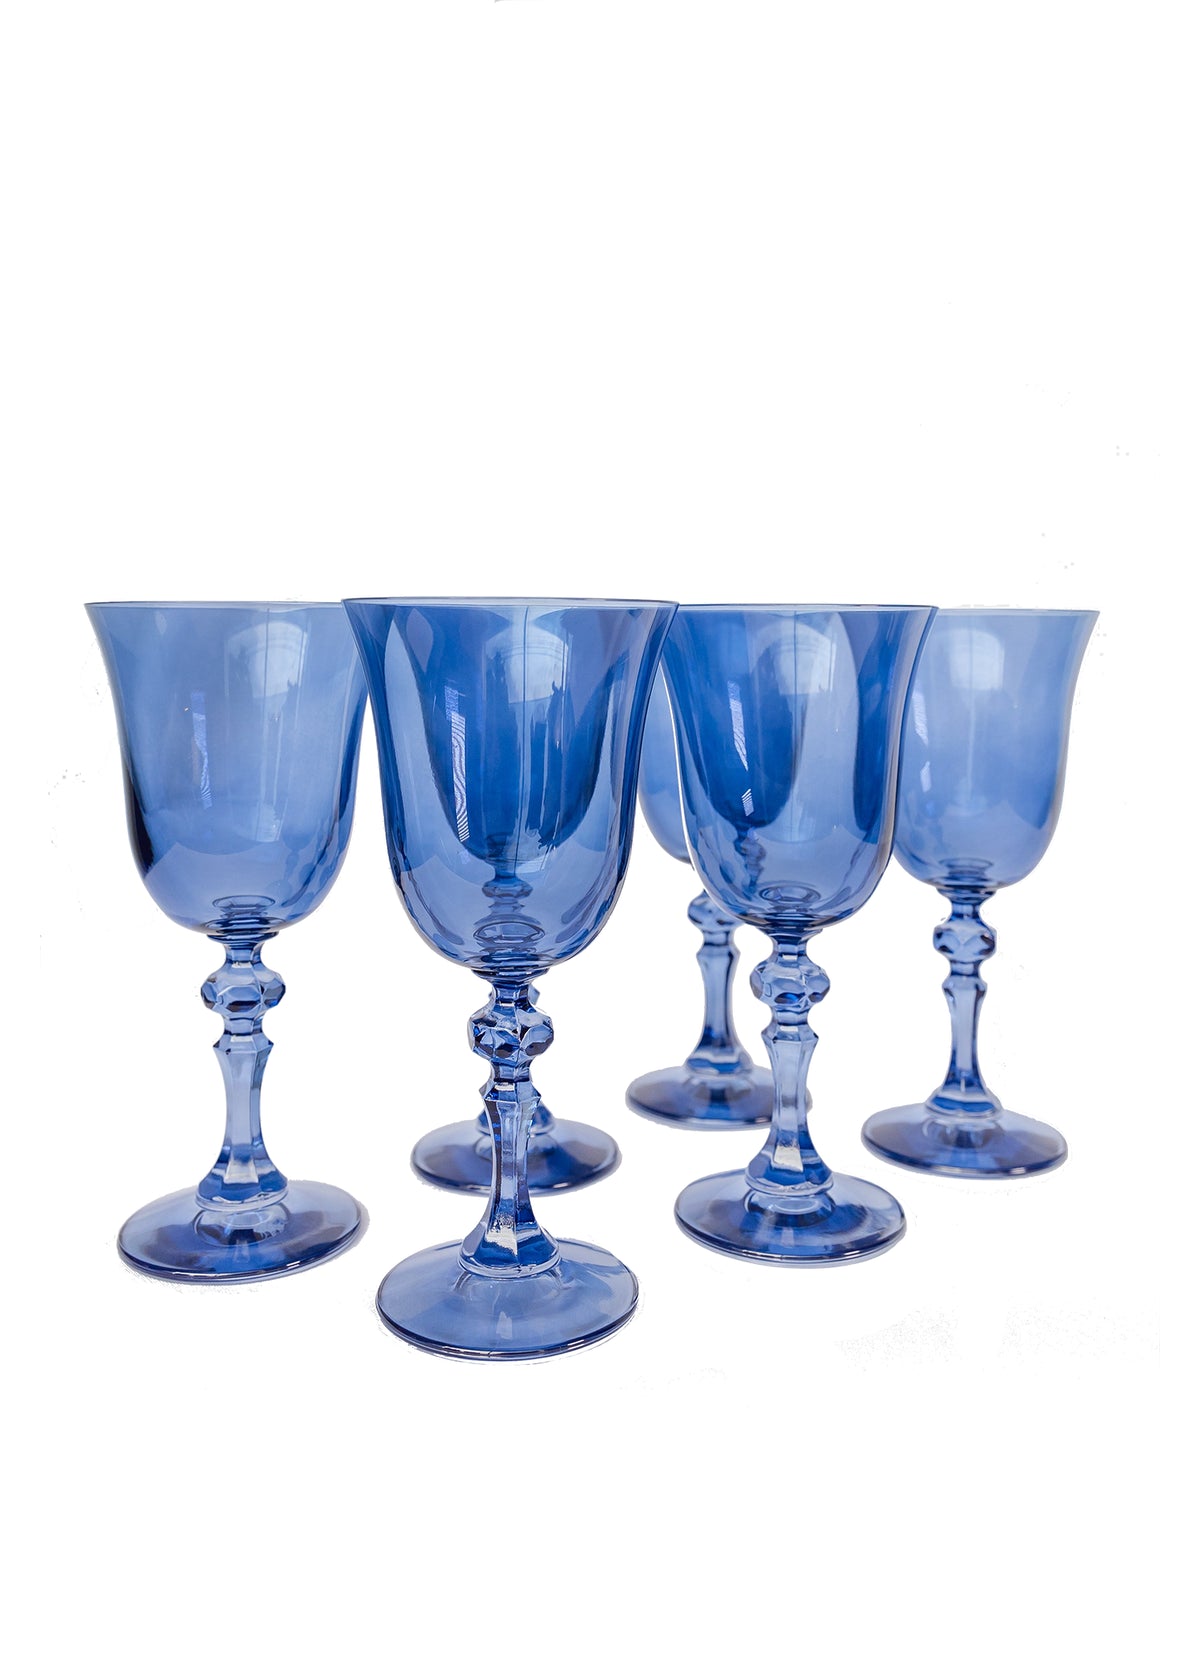 Estelle Colored Glass Champagne Flutes, Set of 6 - Cobalt Blue